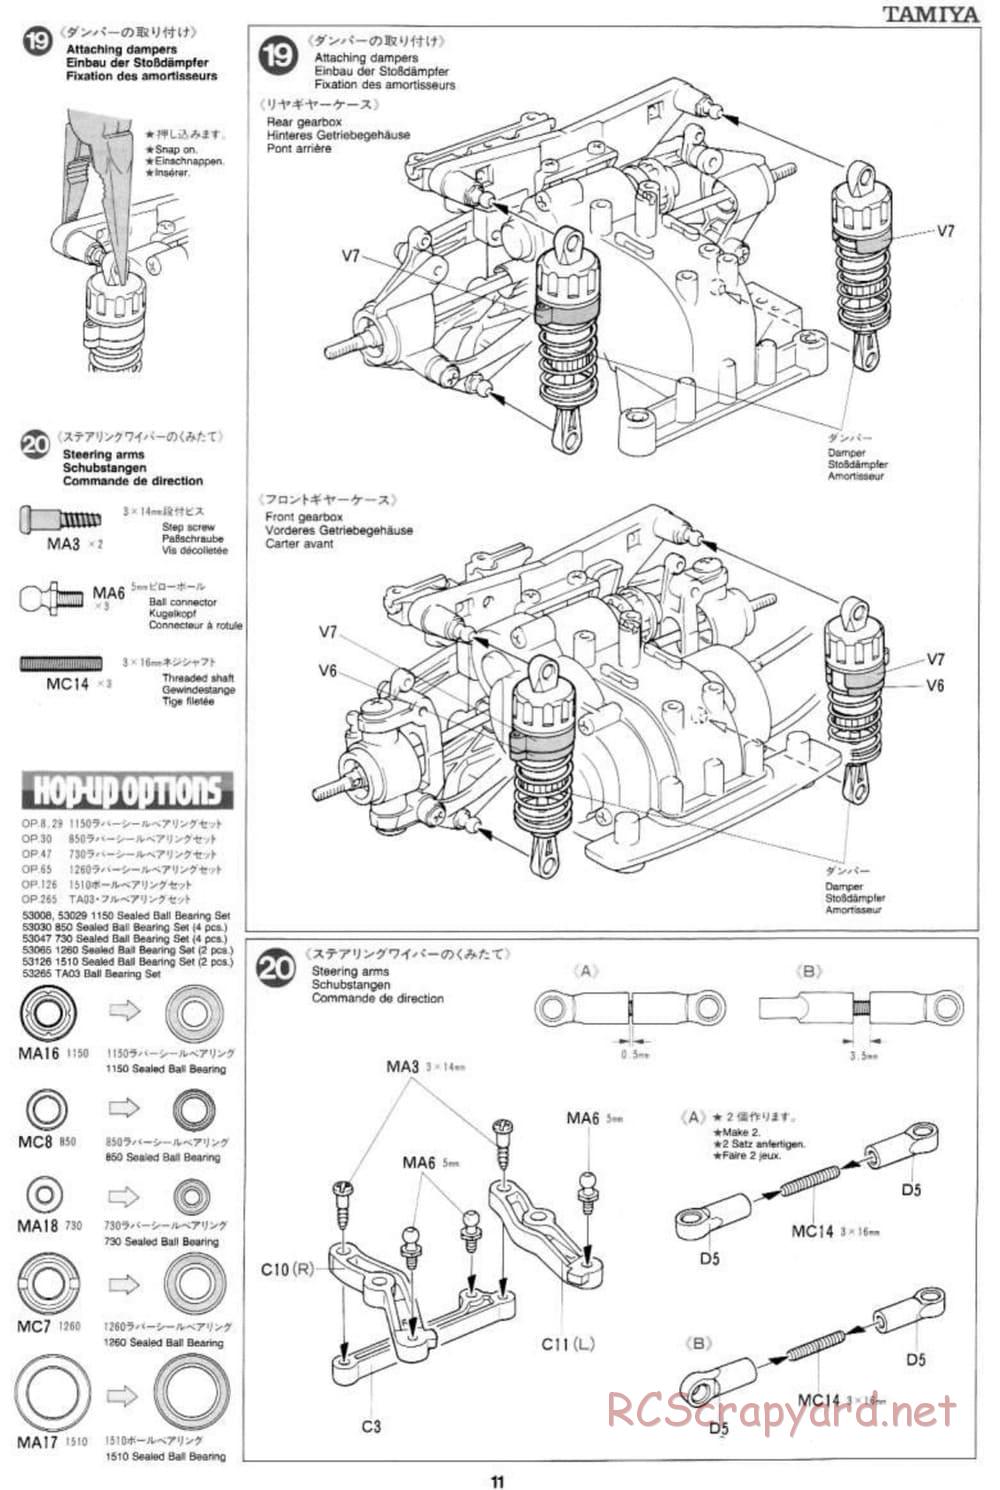 Tamiya - Subaru Impreza WRC 97 - TA-03F Chassis - Manual - Page 11